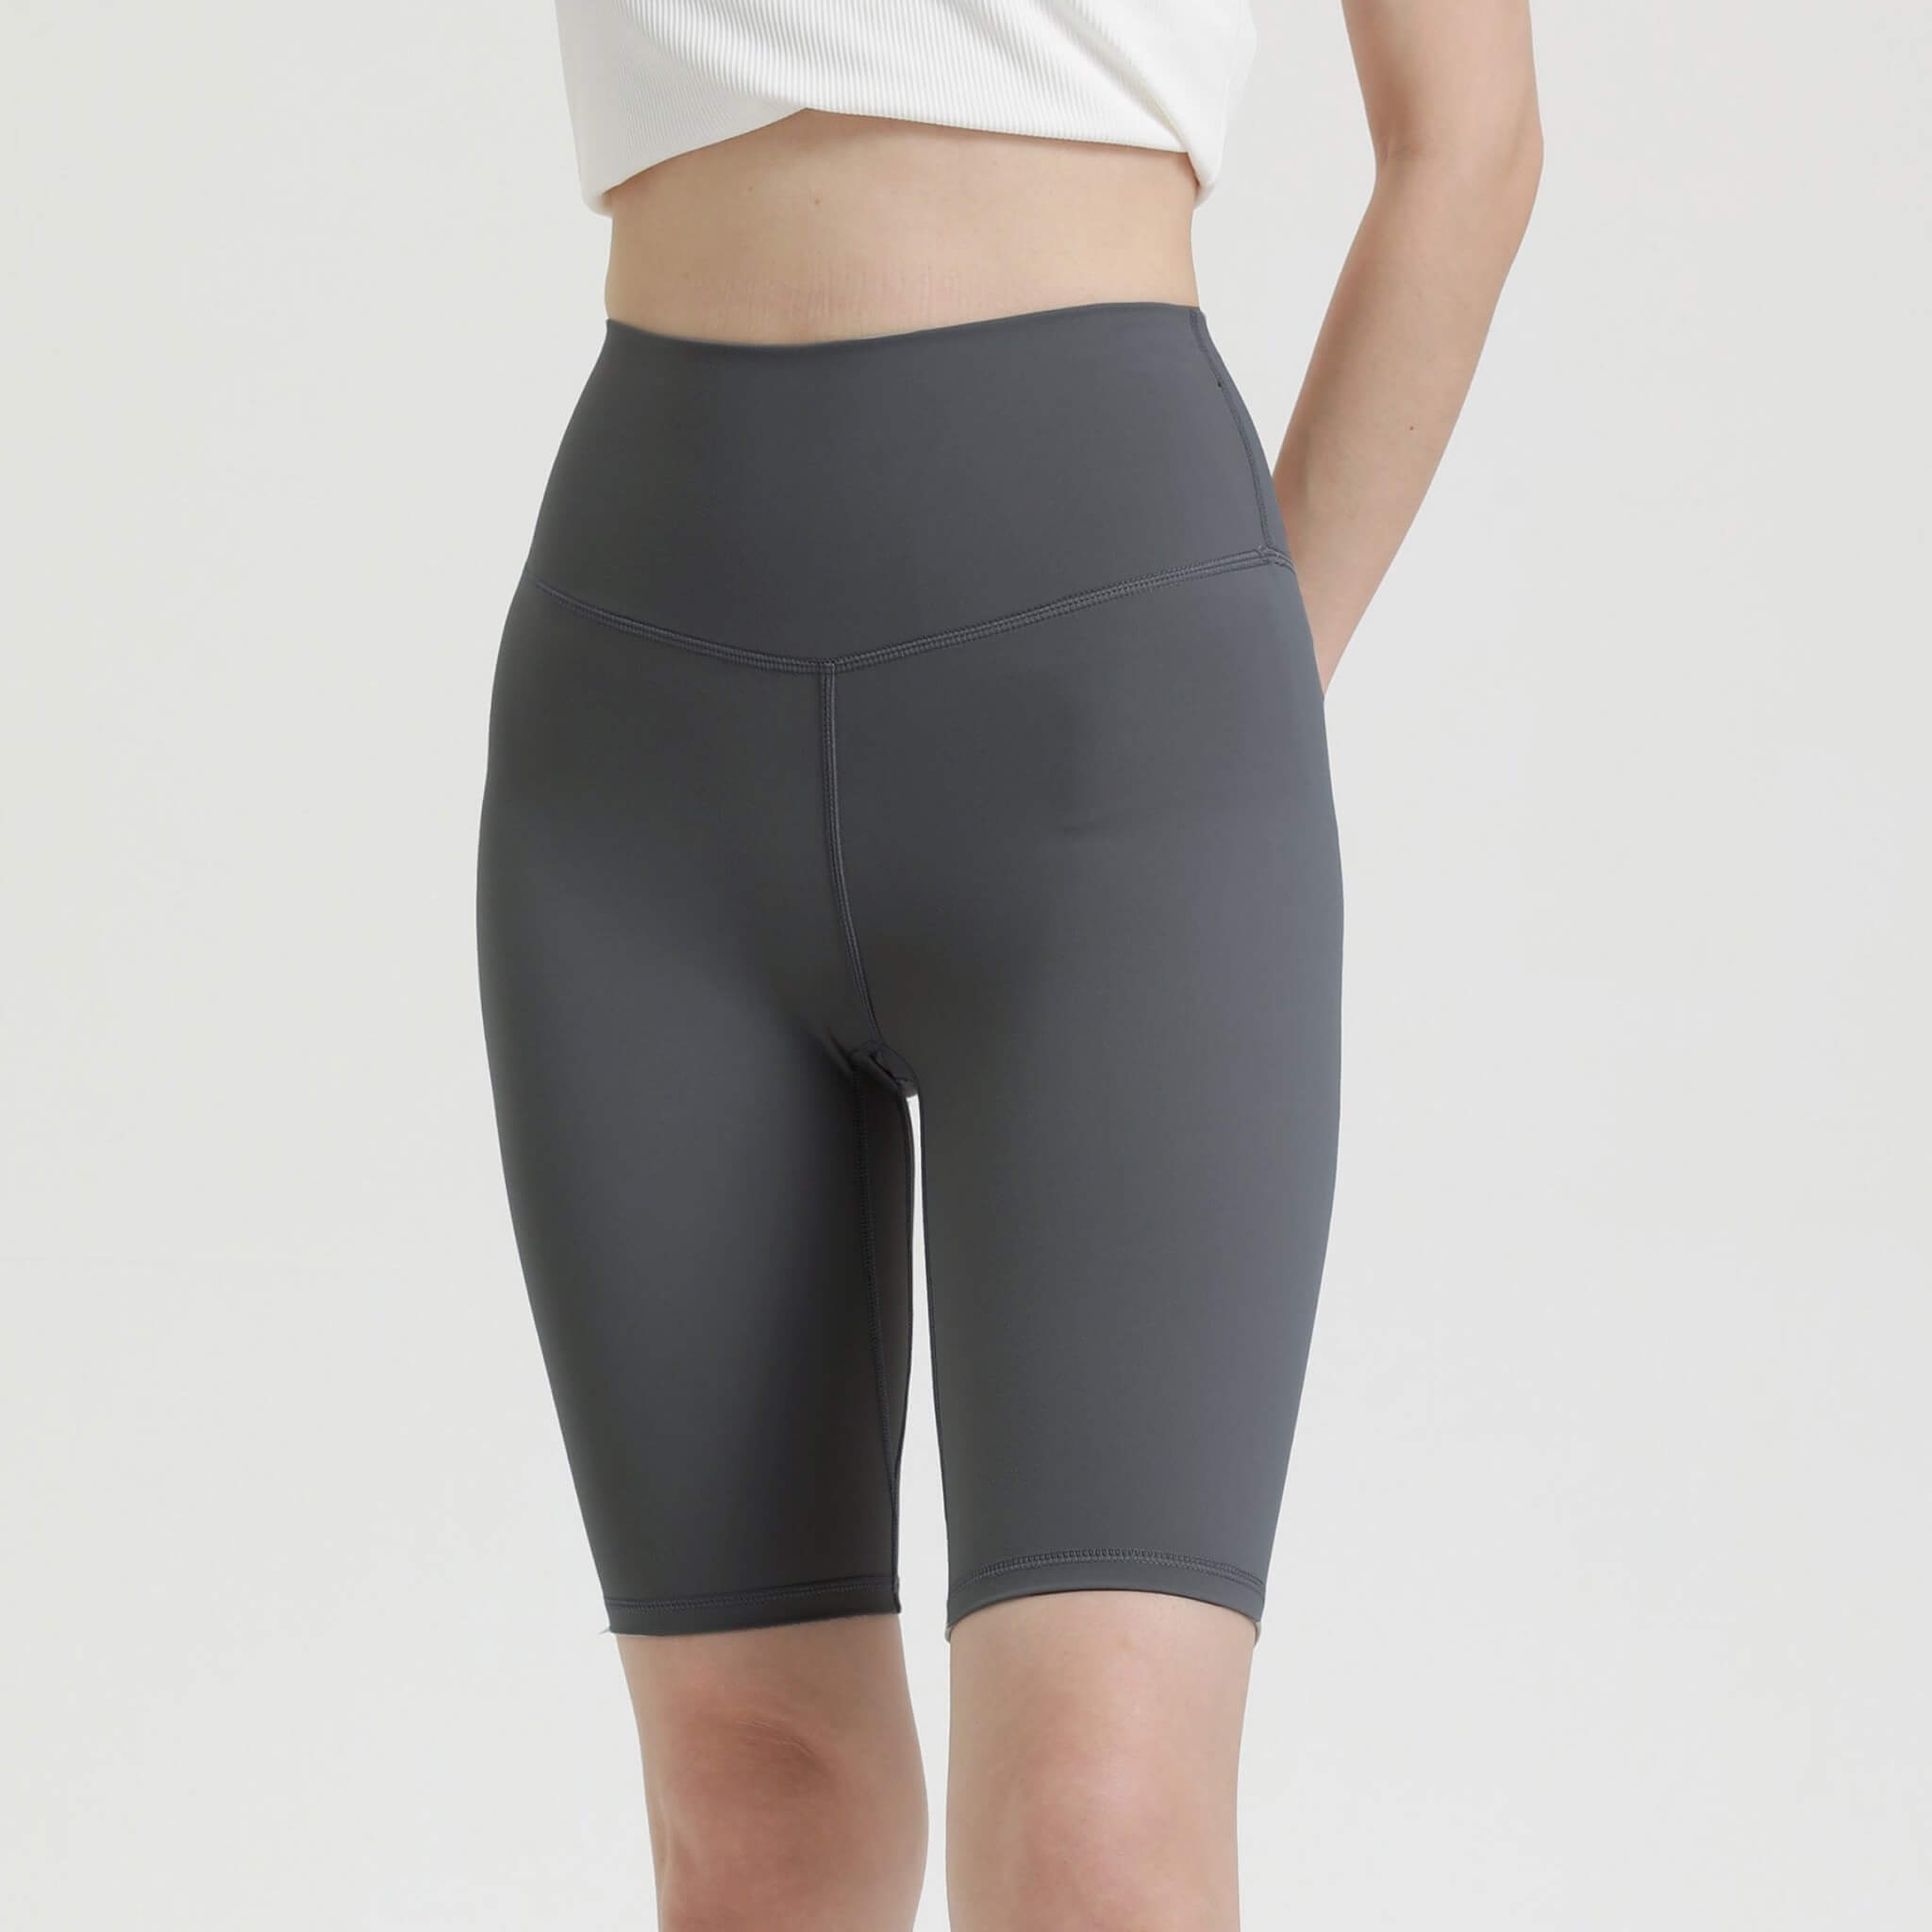 Women's Sports Running Yoga Capri Pants  UponBasics Dark Grey S 